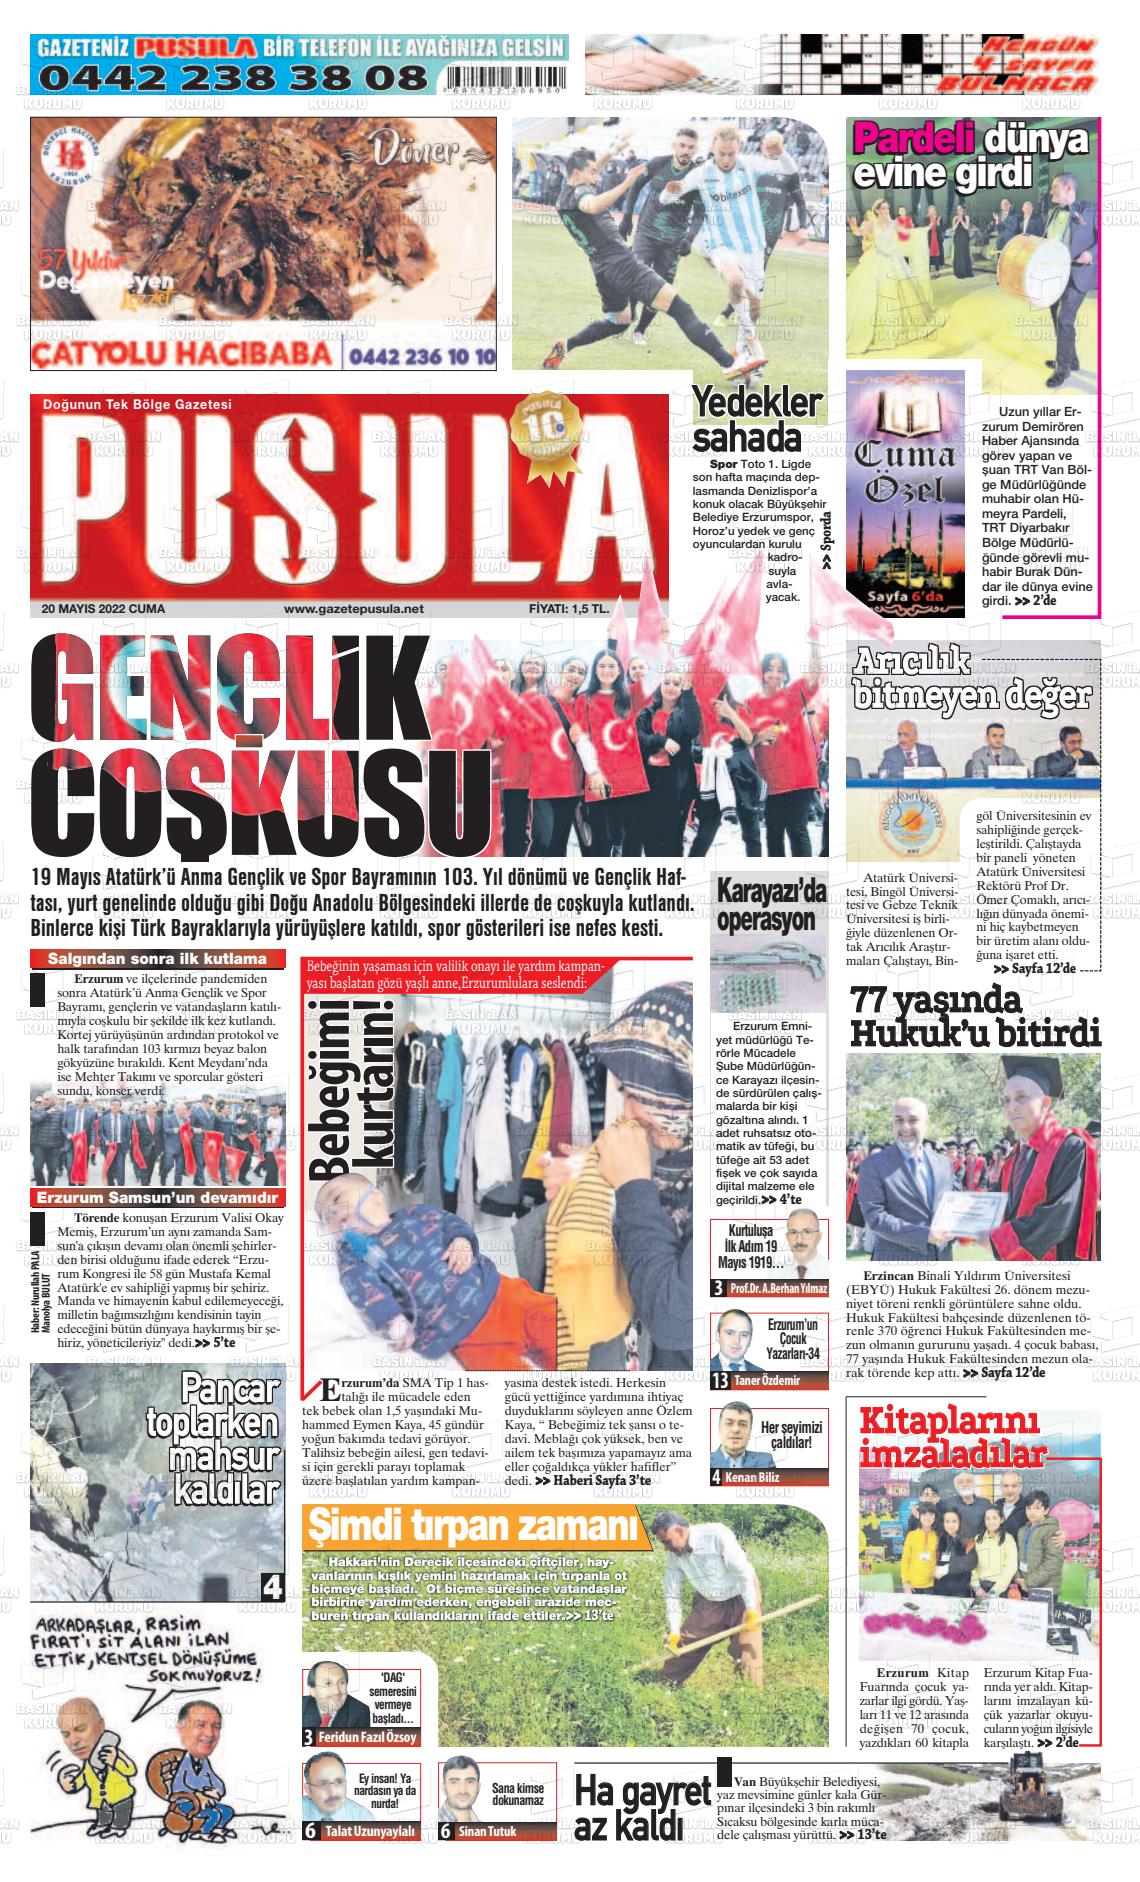 20 Mayıs 2022 Erzurum Pusula Gazete Manşeti